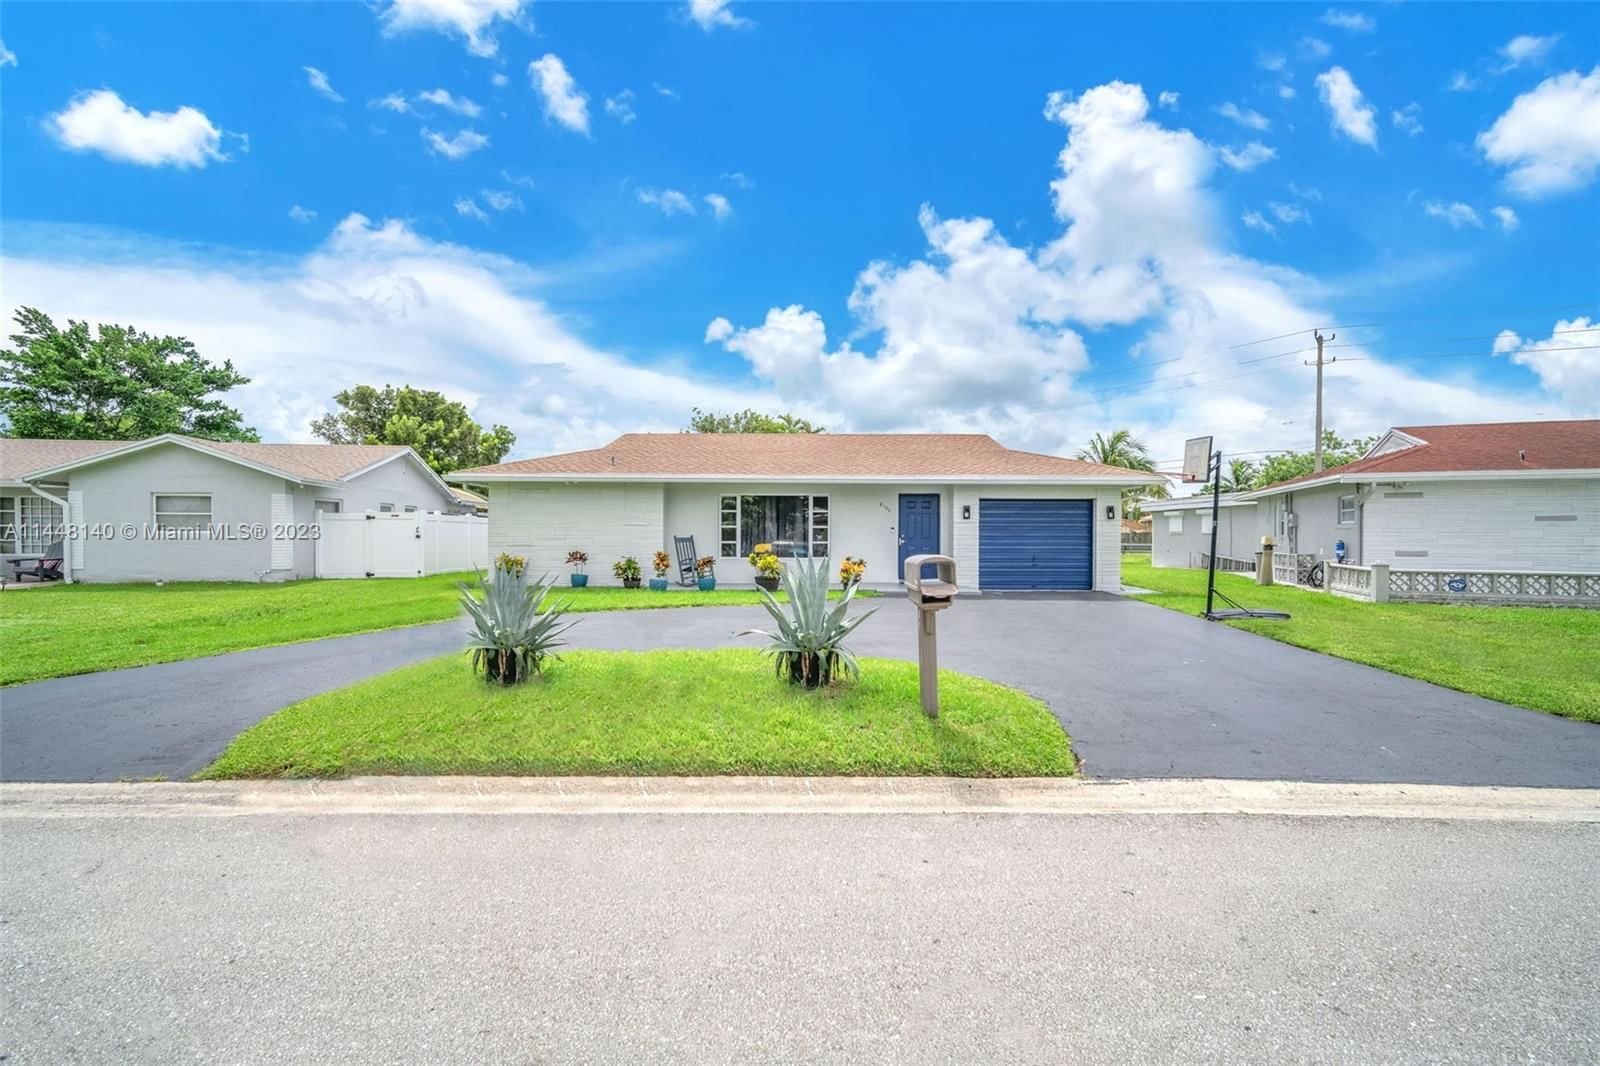 Real estate property located at 8100 91st Ave, Broward County, Tamarac, FL